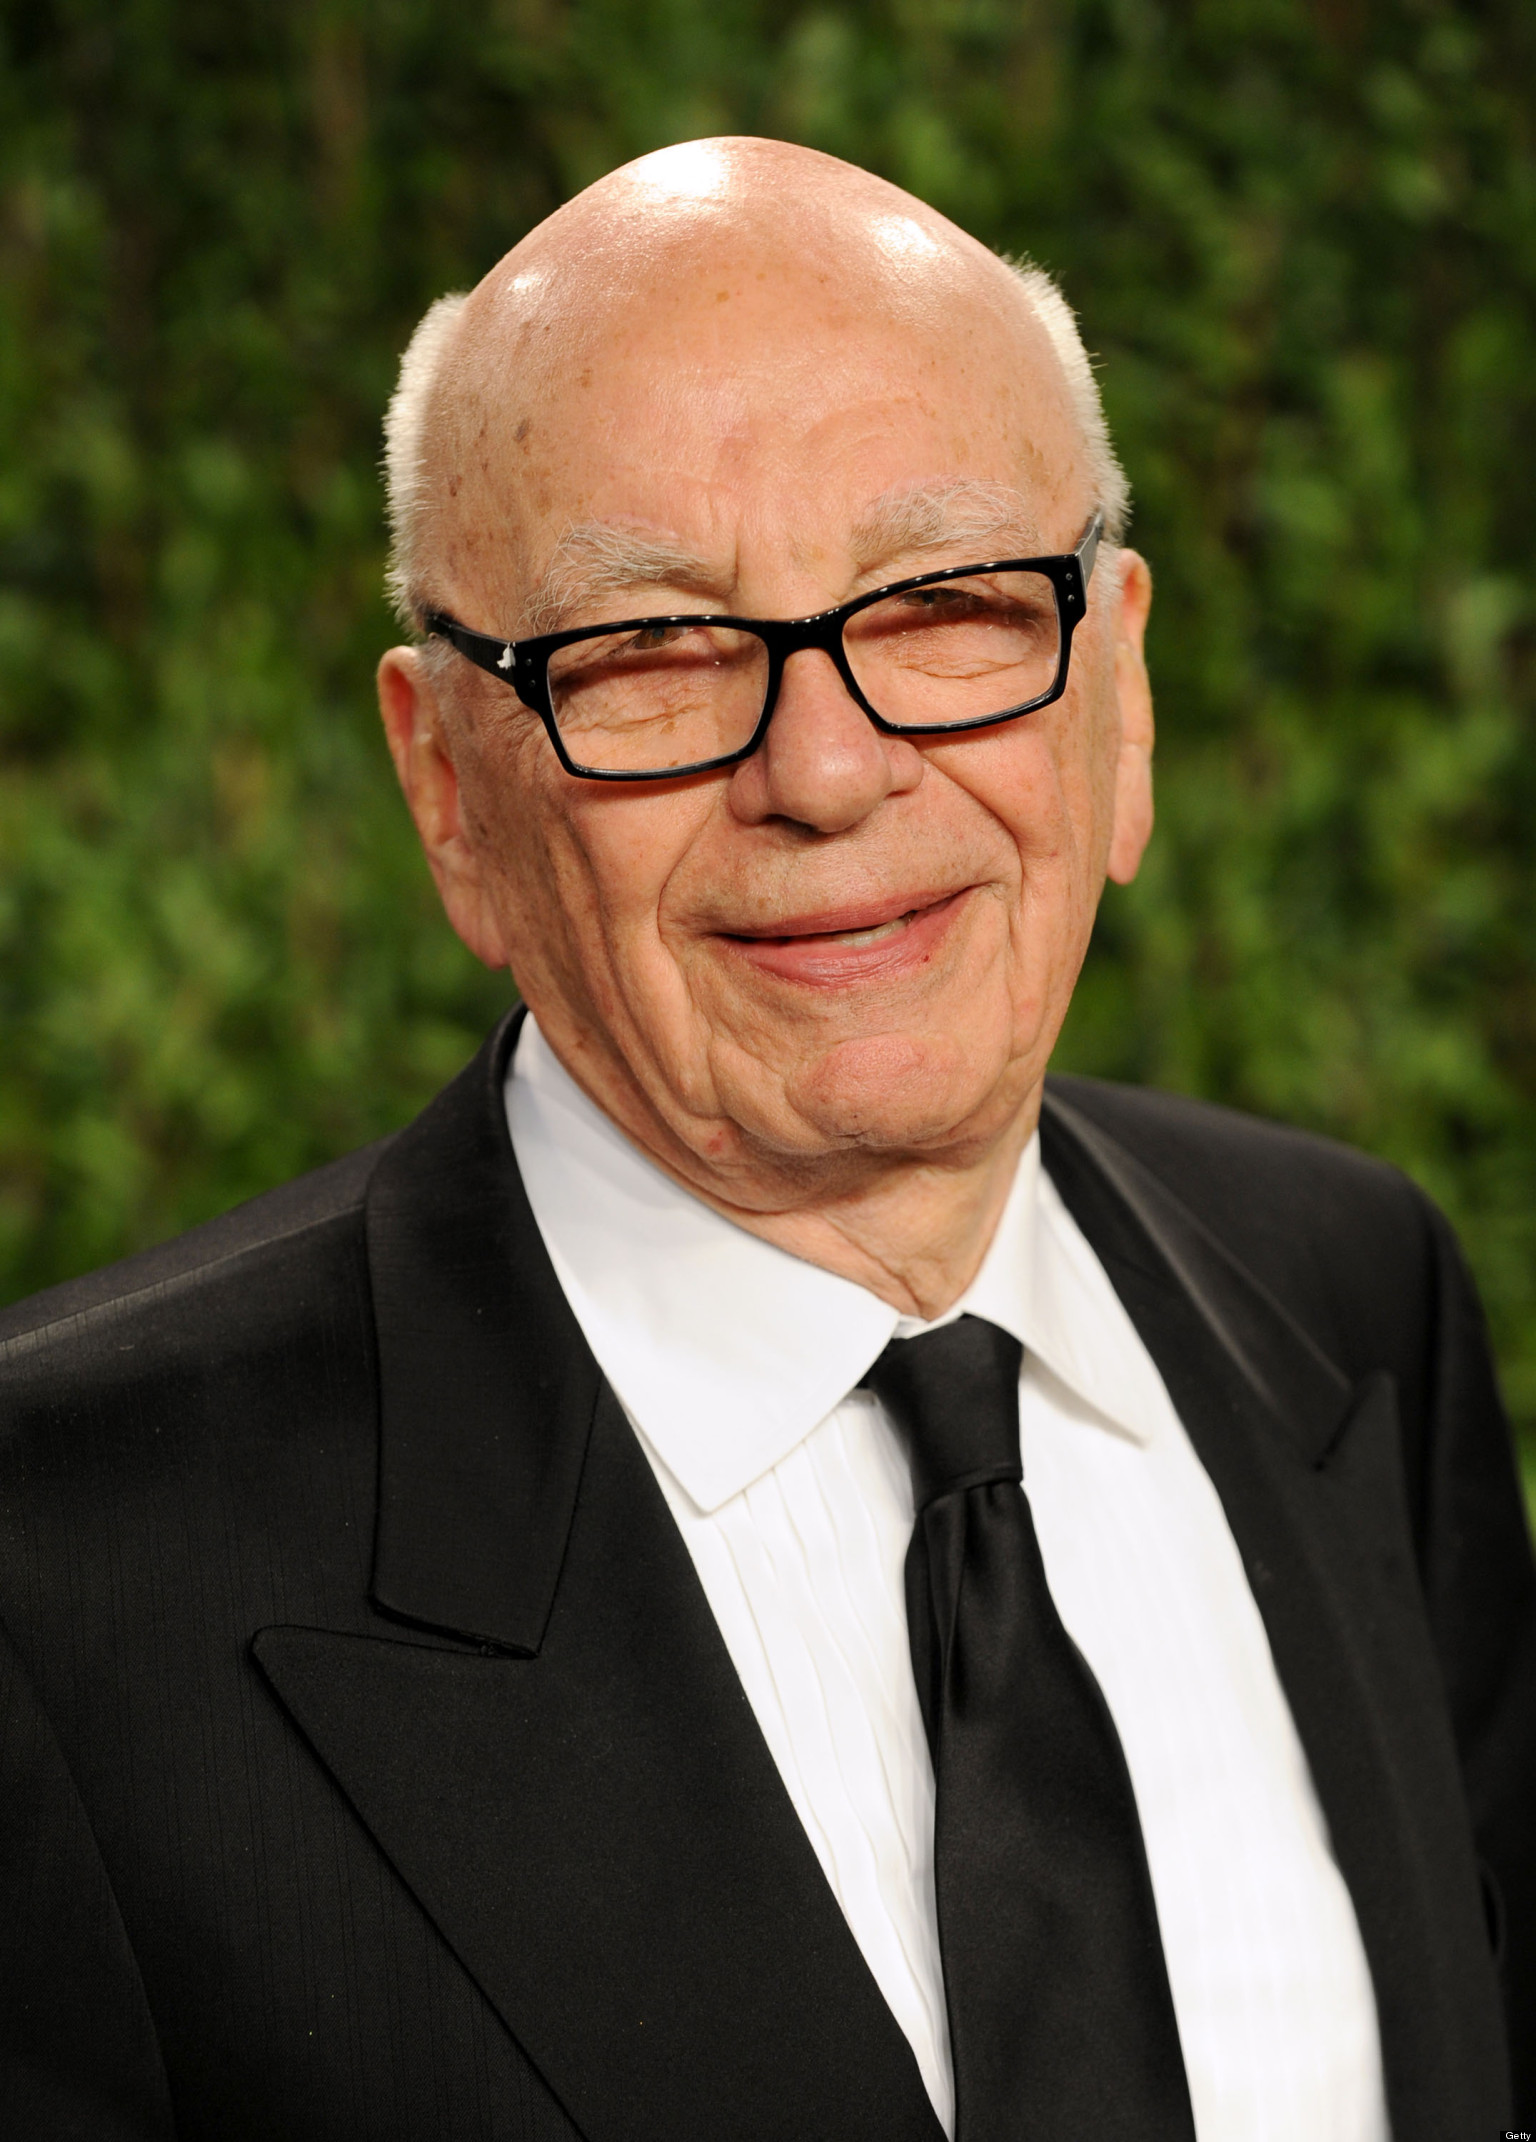 Rupert Murdoch: I've Made 'Spectacular' Mistakes | HuffPost